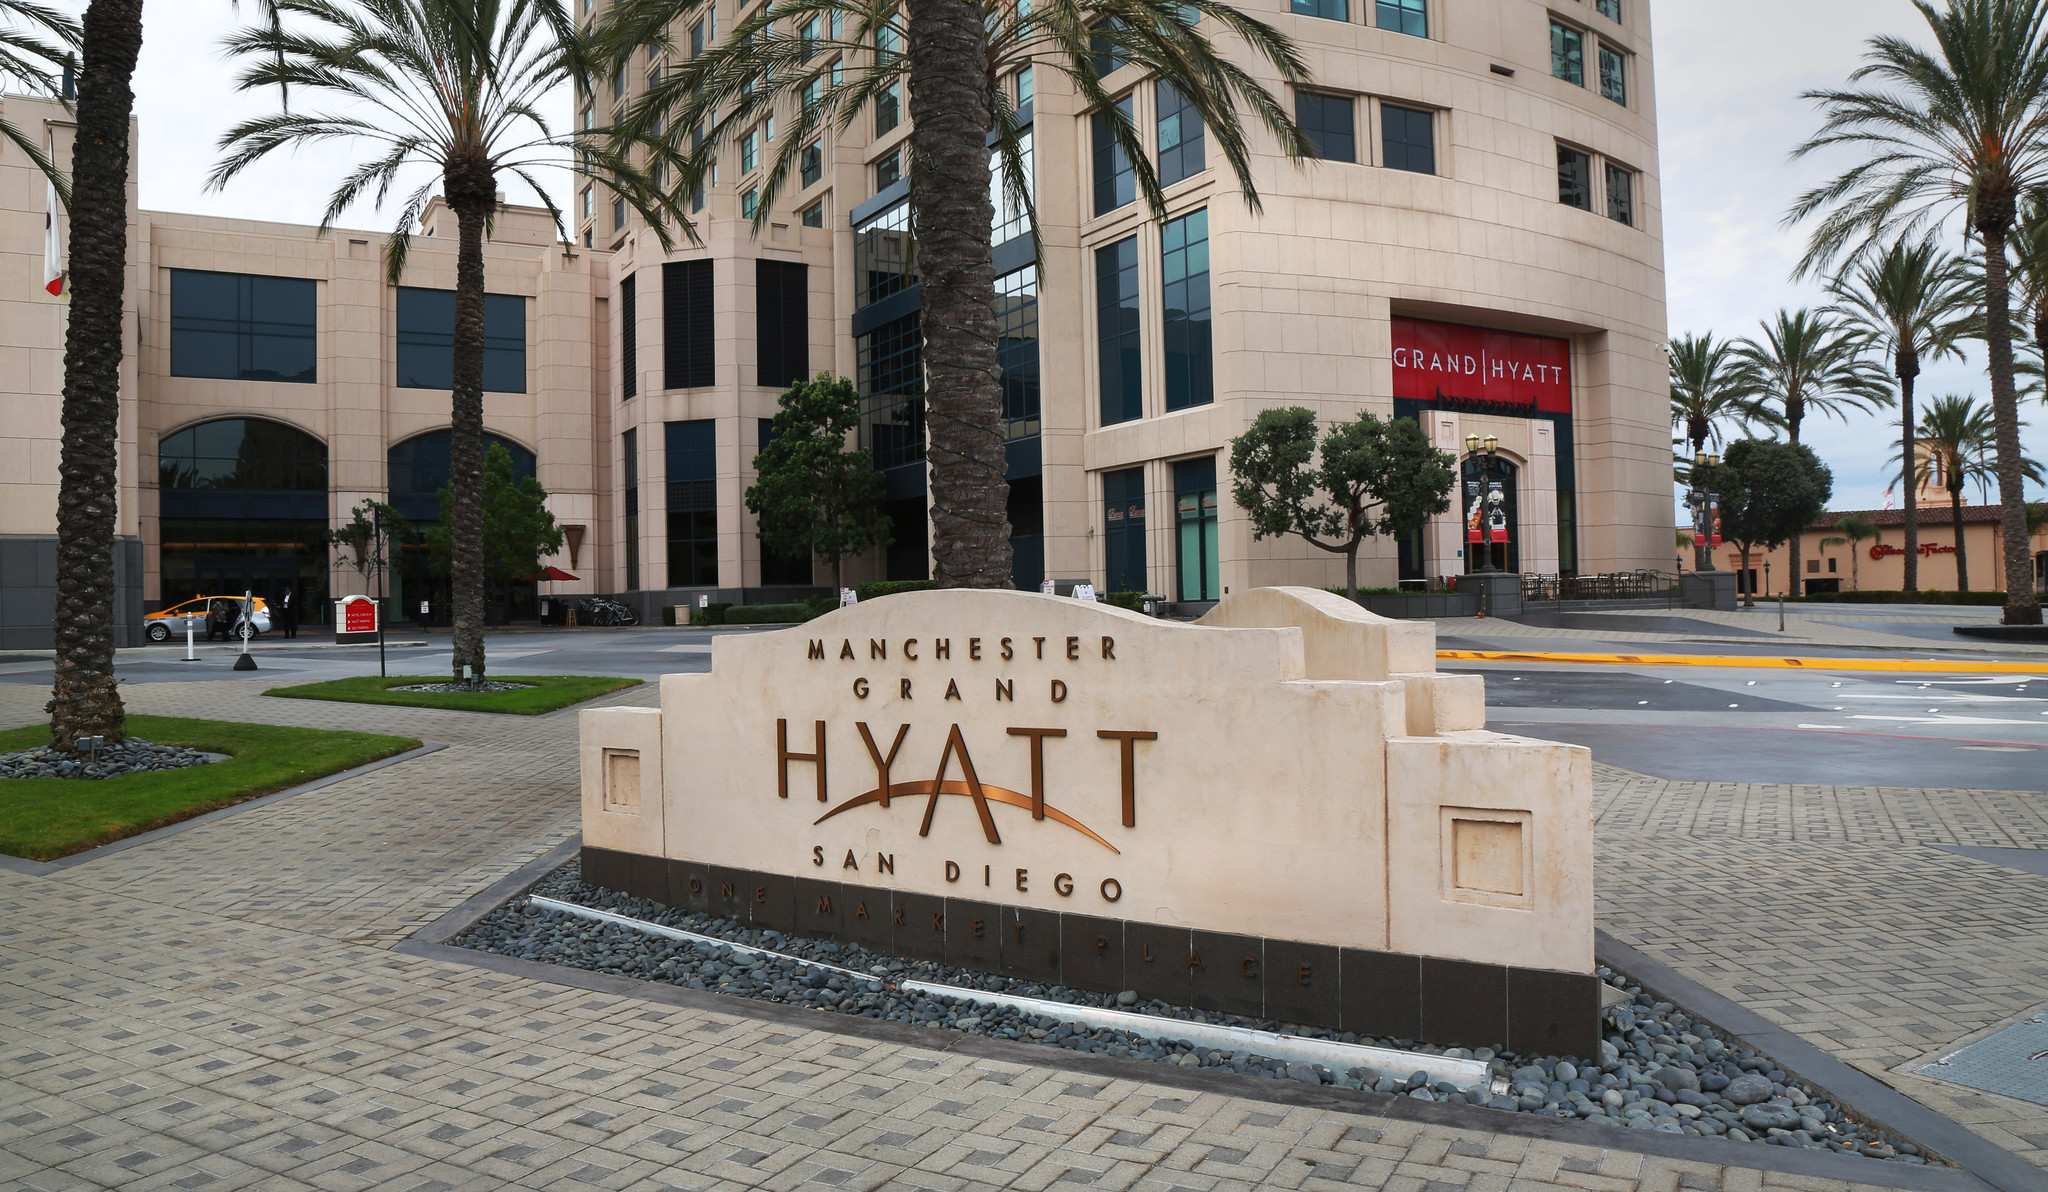 Manchester Hyatt in top 10 meeting hotels in U.S.